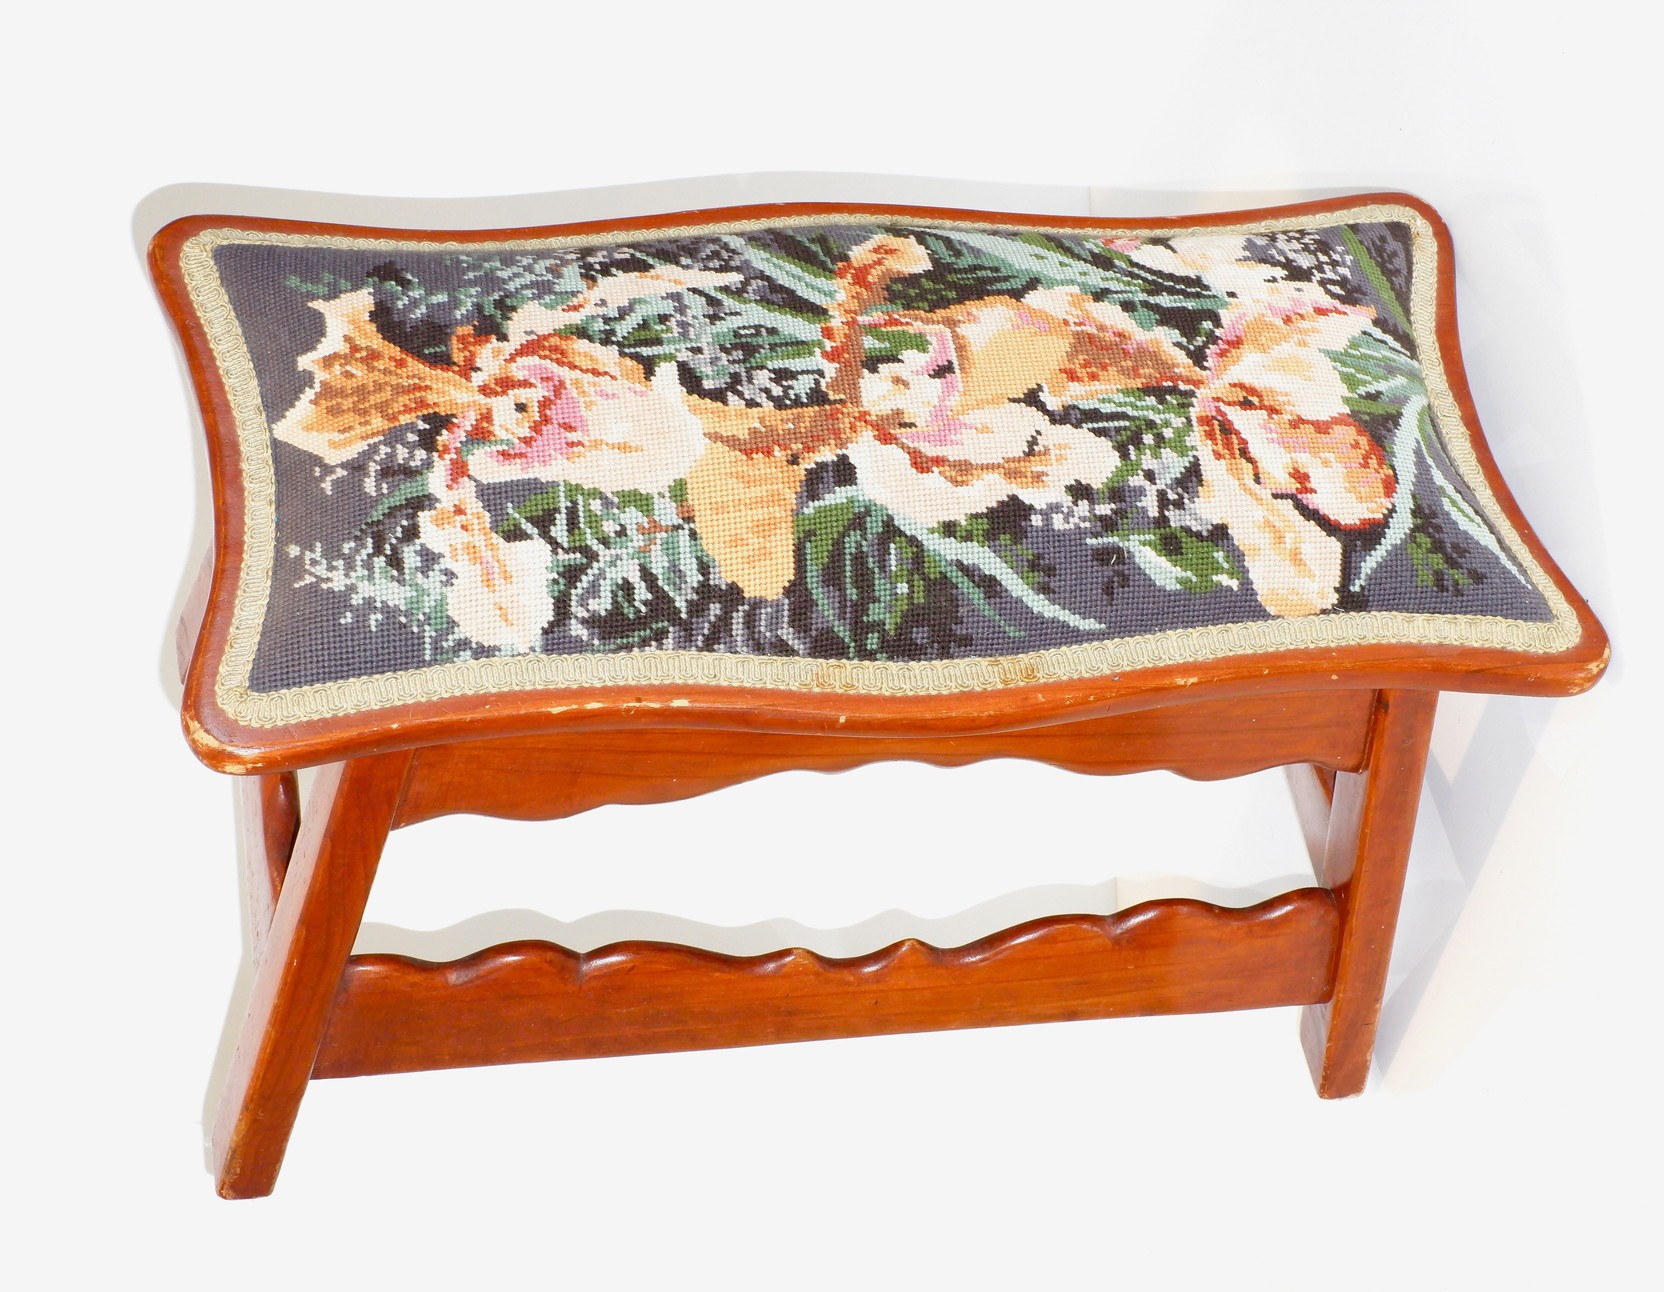 'Vintage Tapestry Upholstered Footstool'